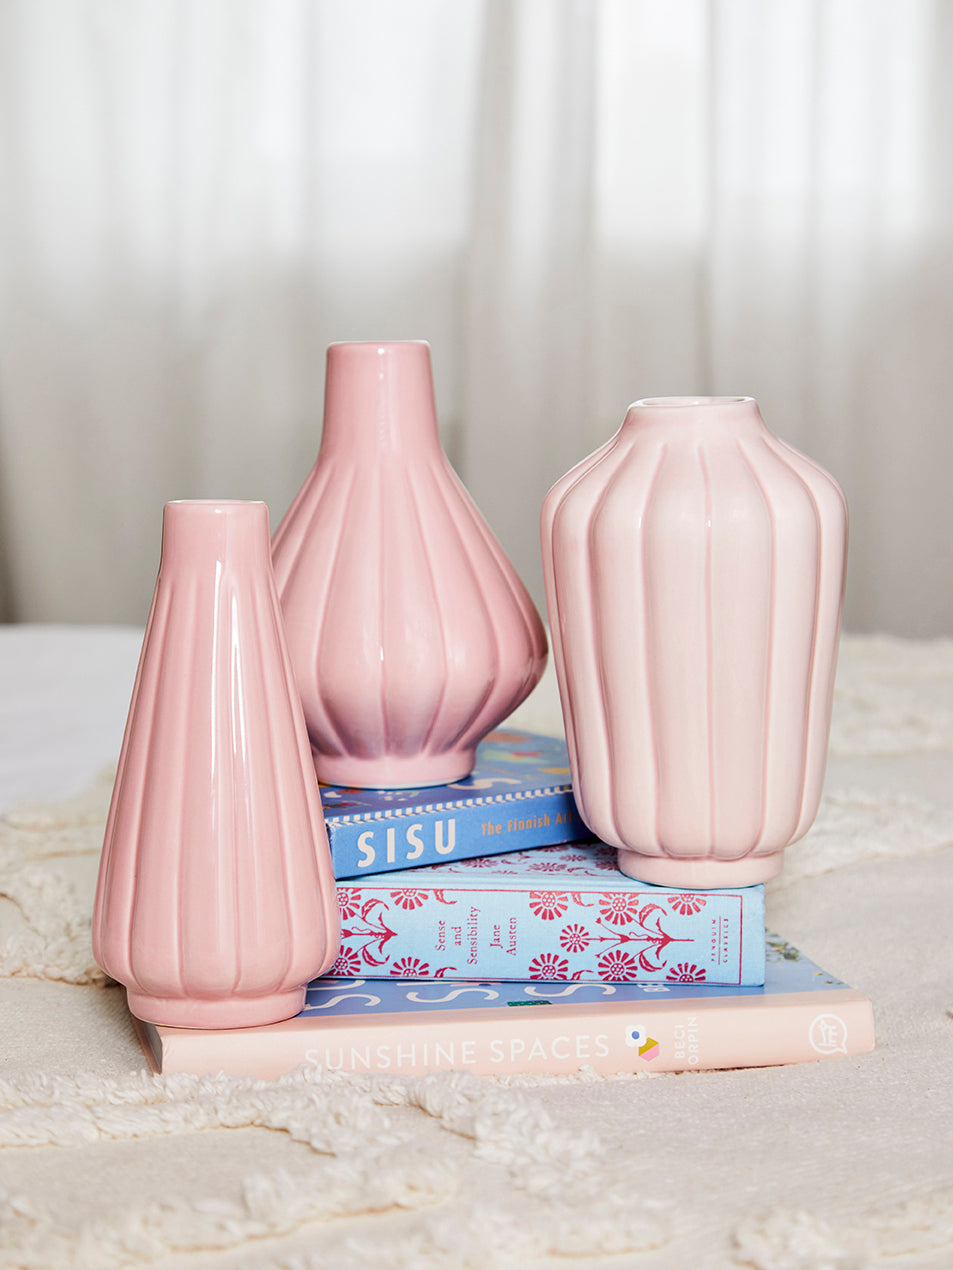 Light Pink Ceramic Vase With Grooves